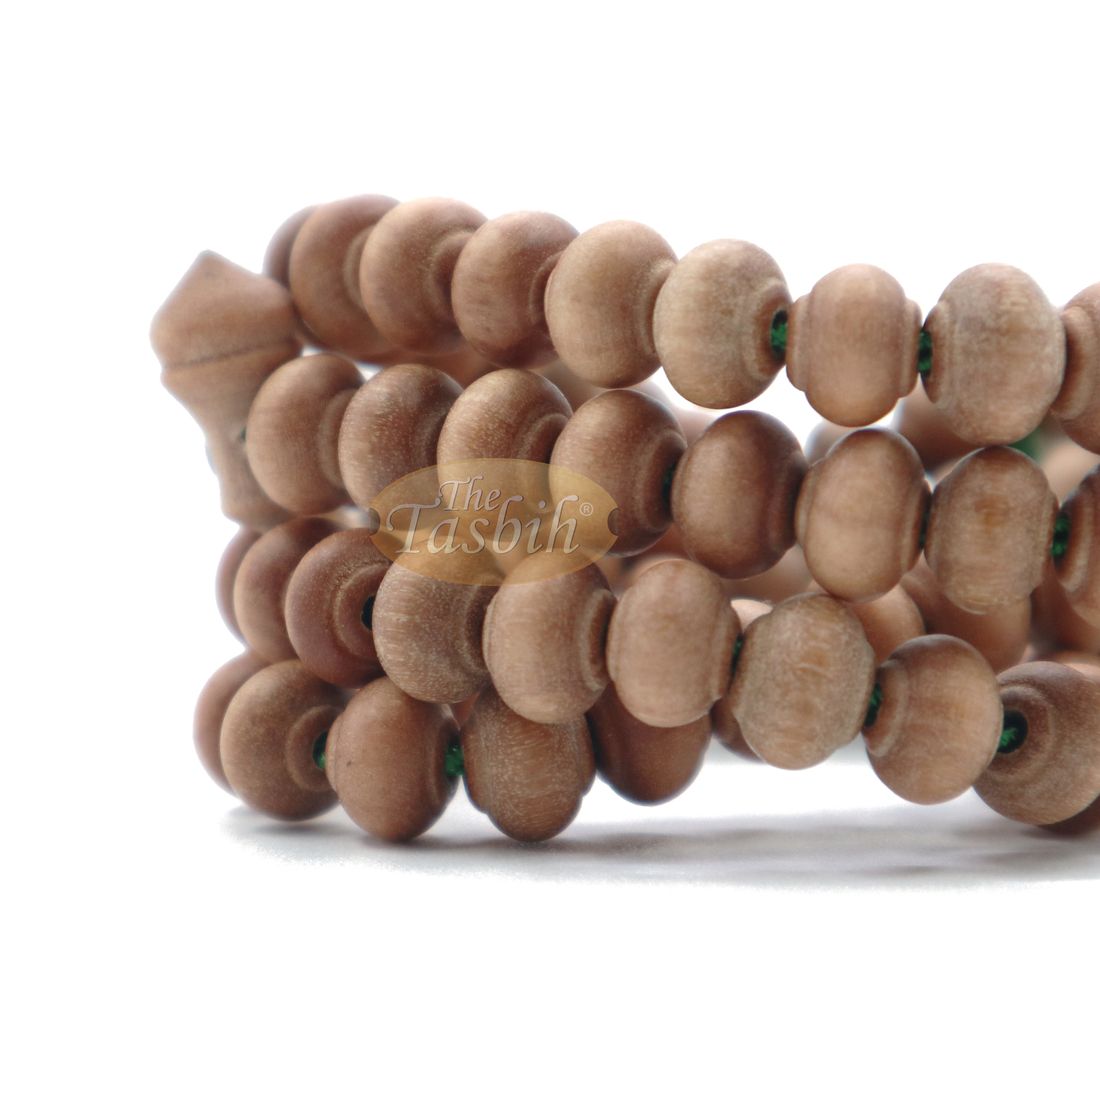 Sandalwood Prayer beads – 7mm- Contoured beads Sandalwood Tasbih Prayer Beads with Green Tassels